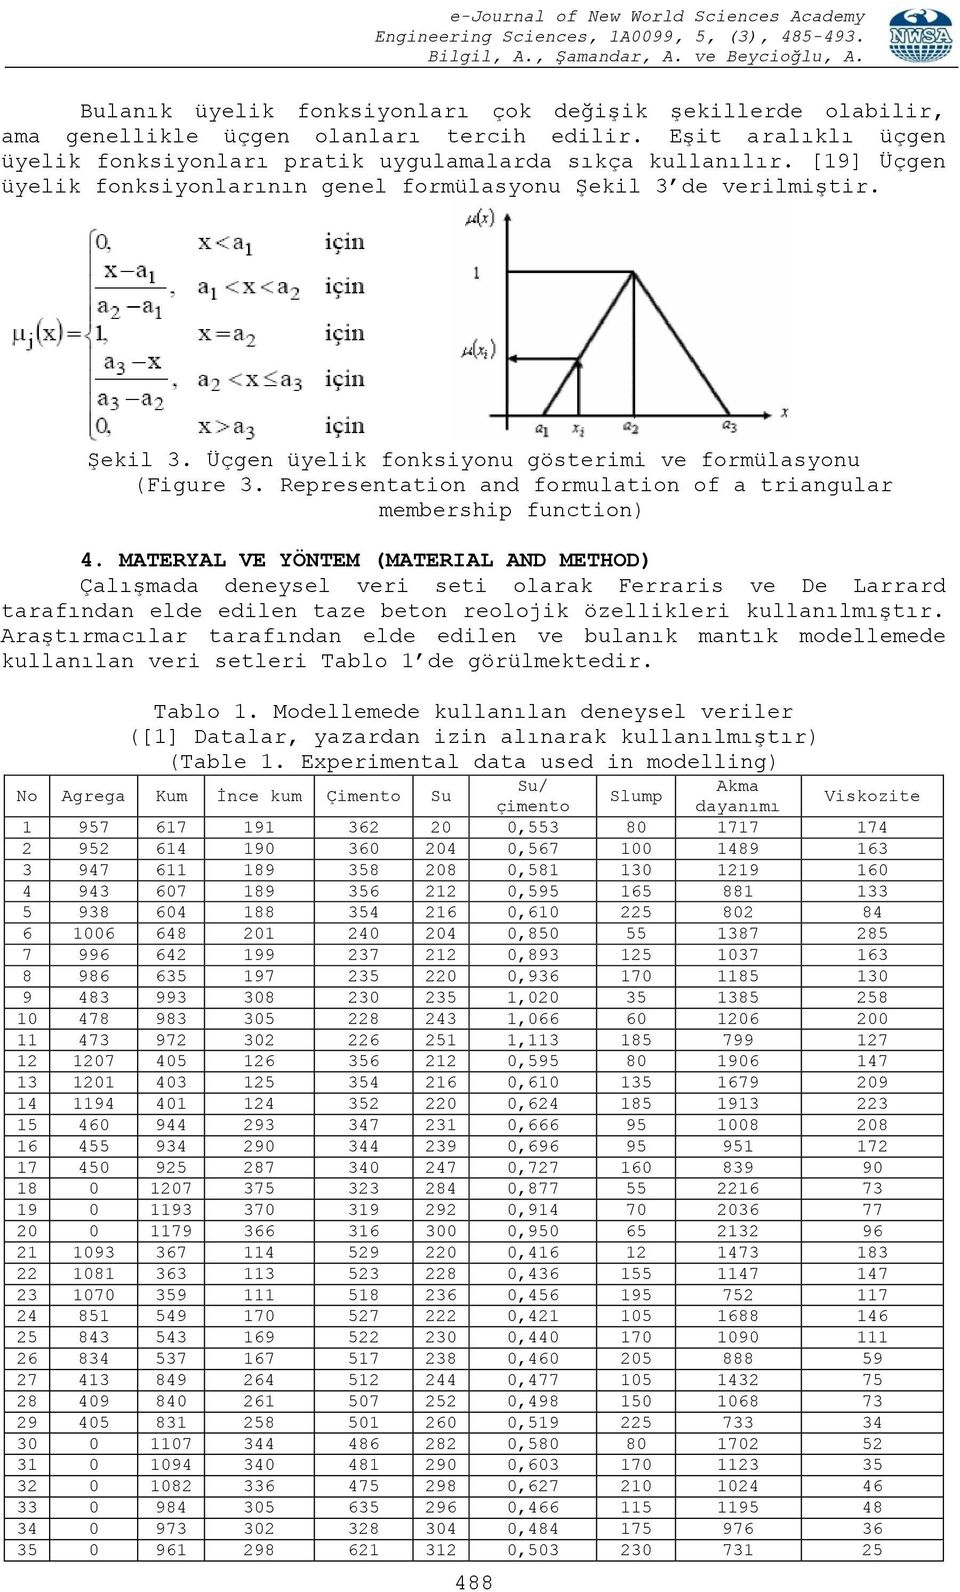 Representation and formulation of a triangular membership function) 4.